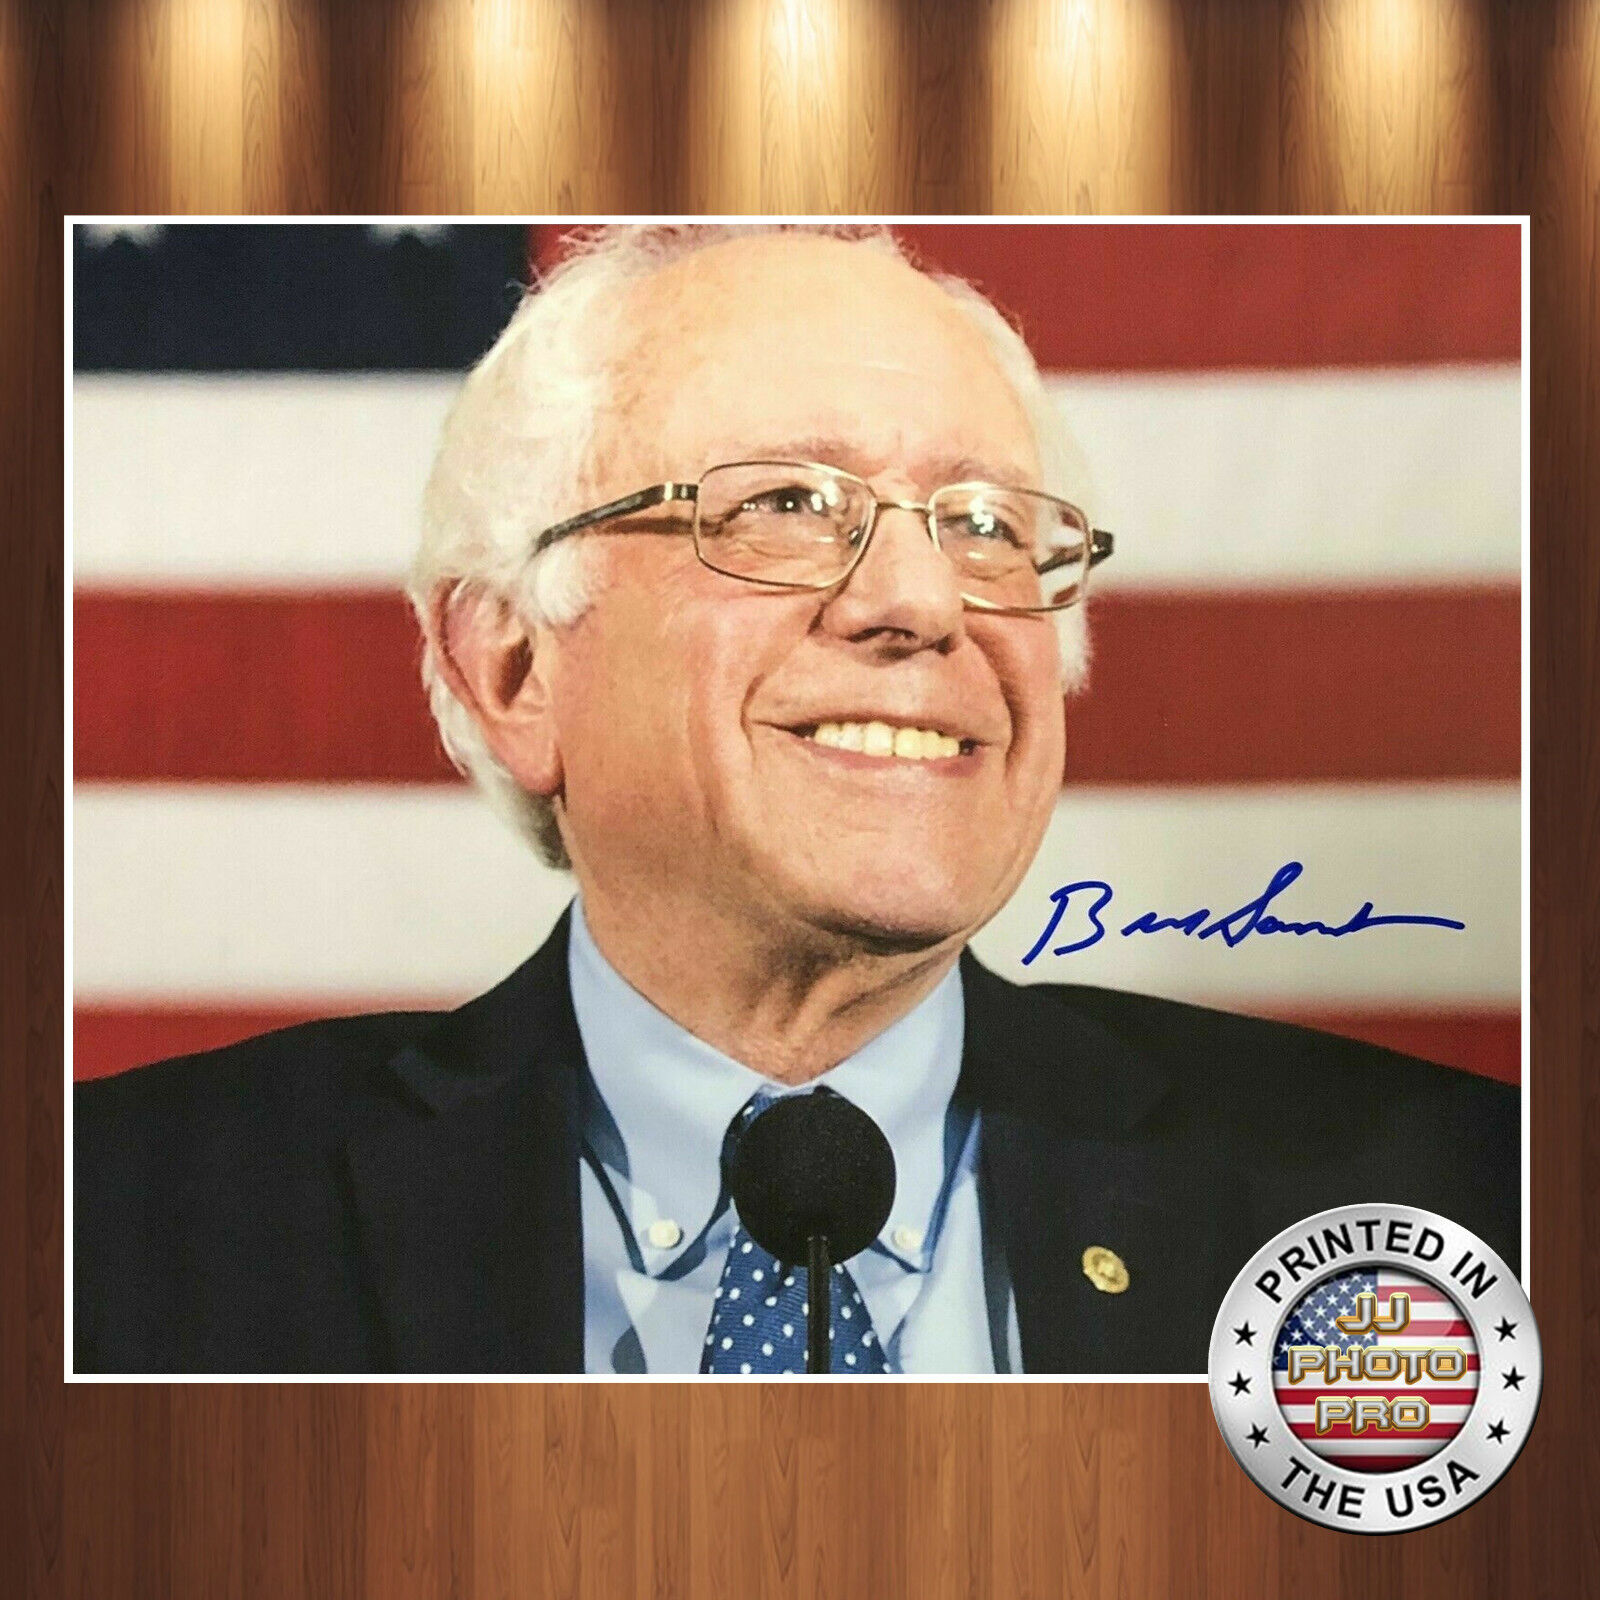 Bernie Sanders Autographed Signed 8x10 Photo Poster painting REPRINT